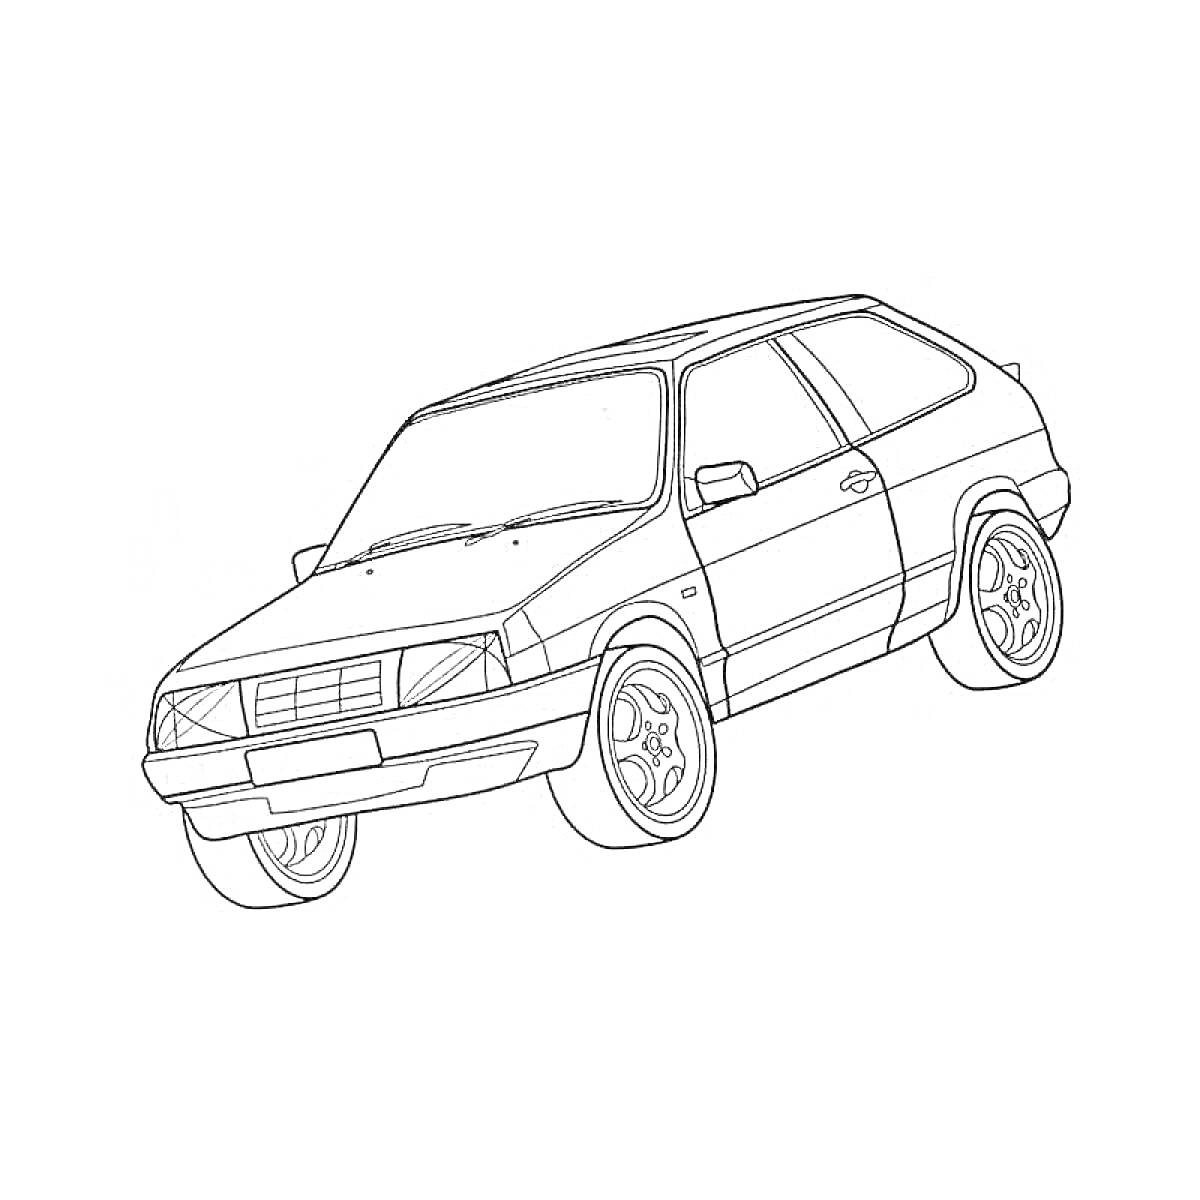 Раскраска Машина девятка, вид сбоку, передние и задние колеса, кузов, окна, передний капот, двери, фары